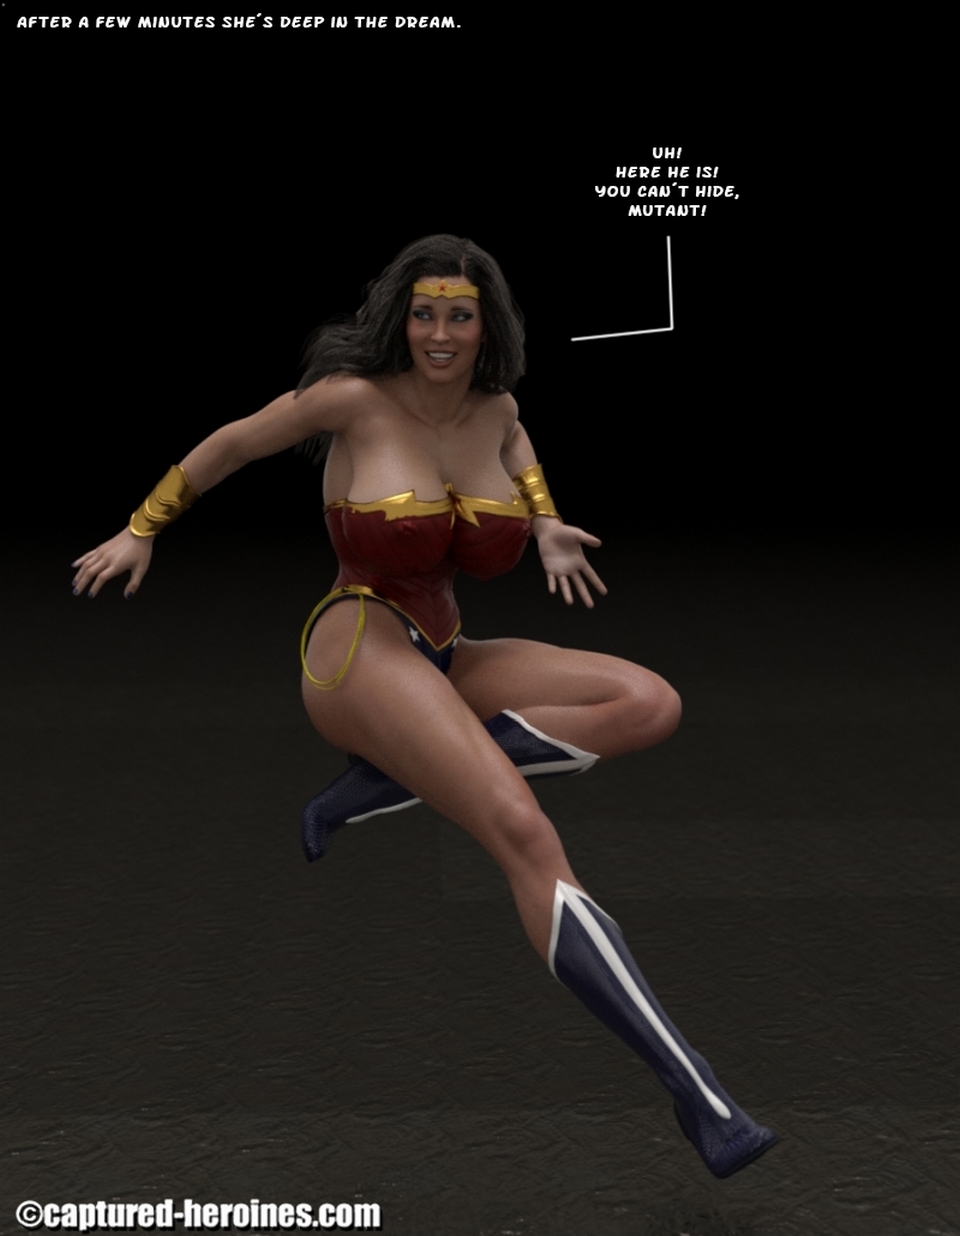 Wonder Woman- The Dream by Captured Heroines - Porn Cartoon Comics